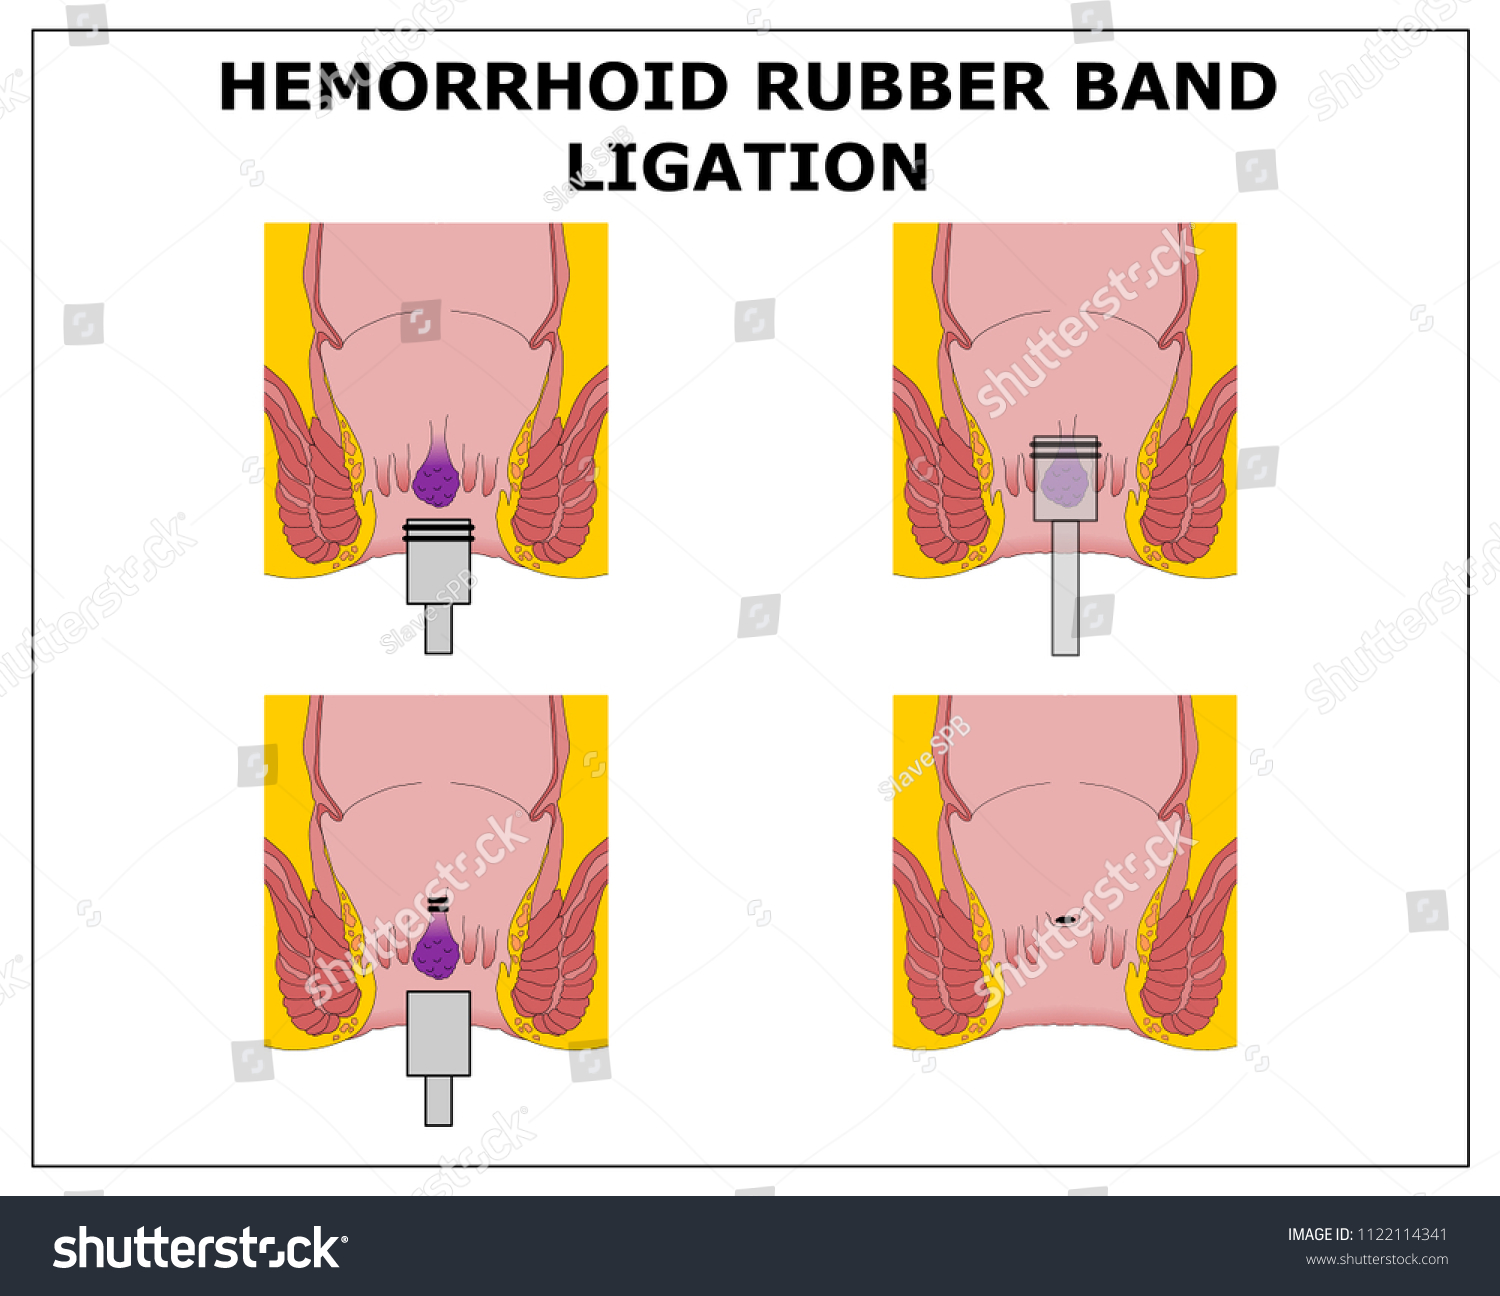 hemorrhoid rubber band